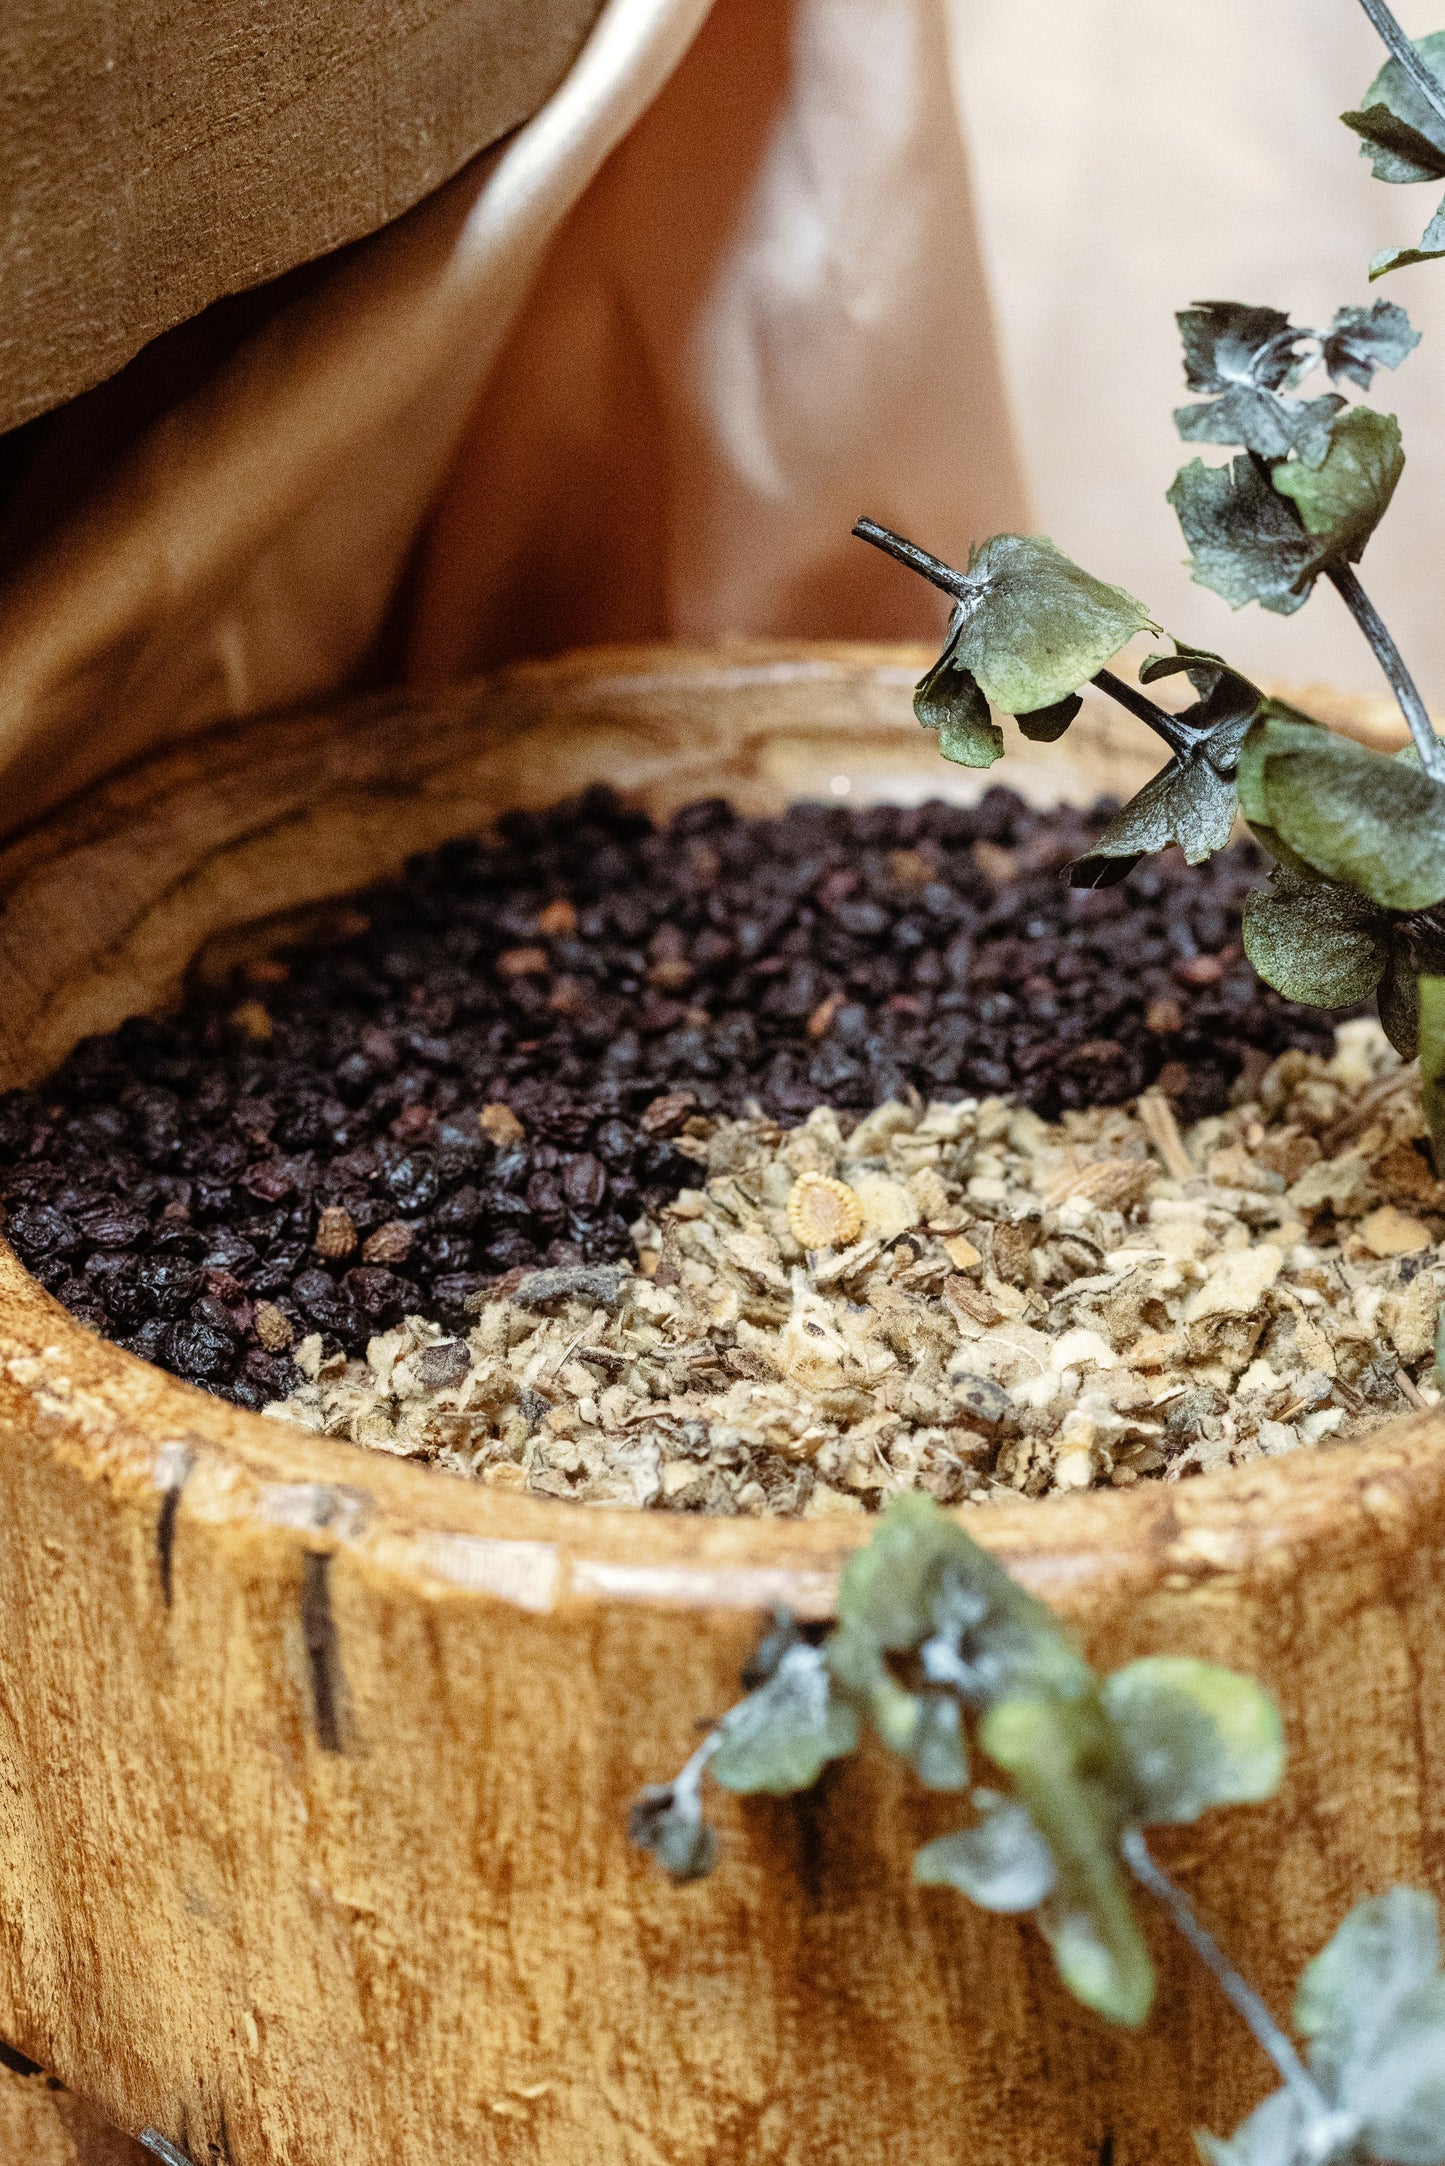 Organic Elderberry Elixir infused with mullein